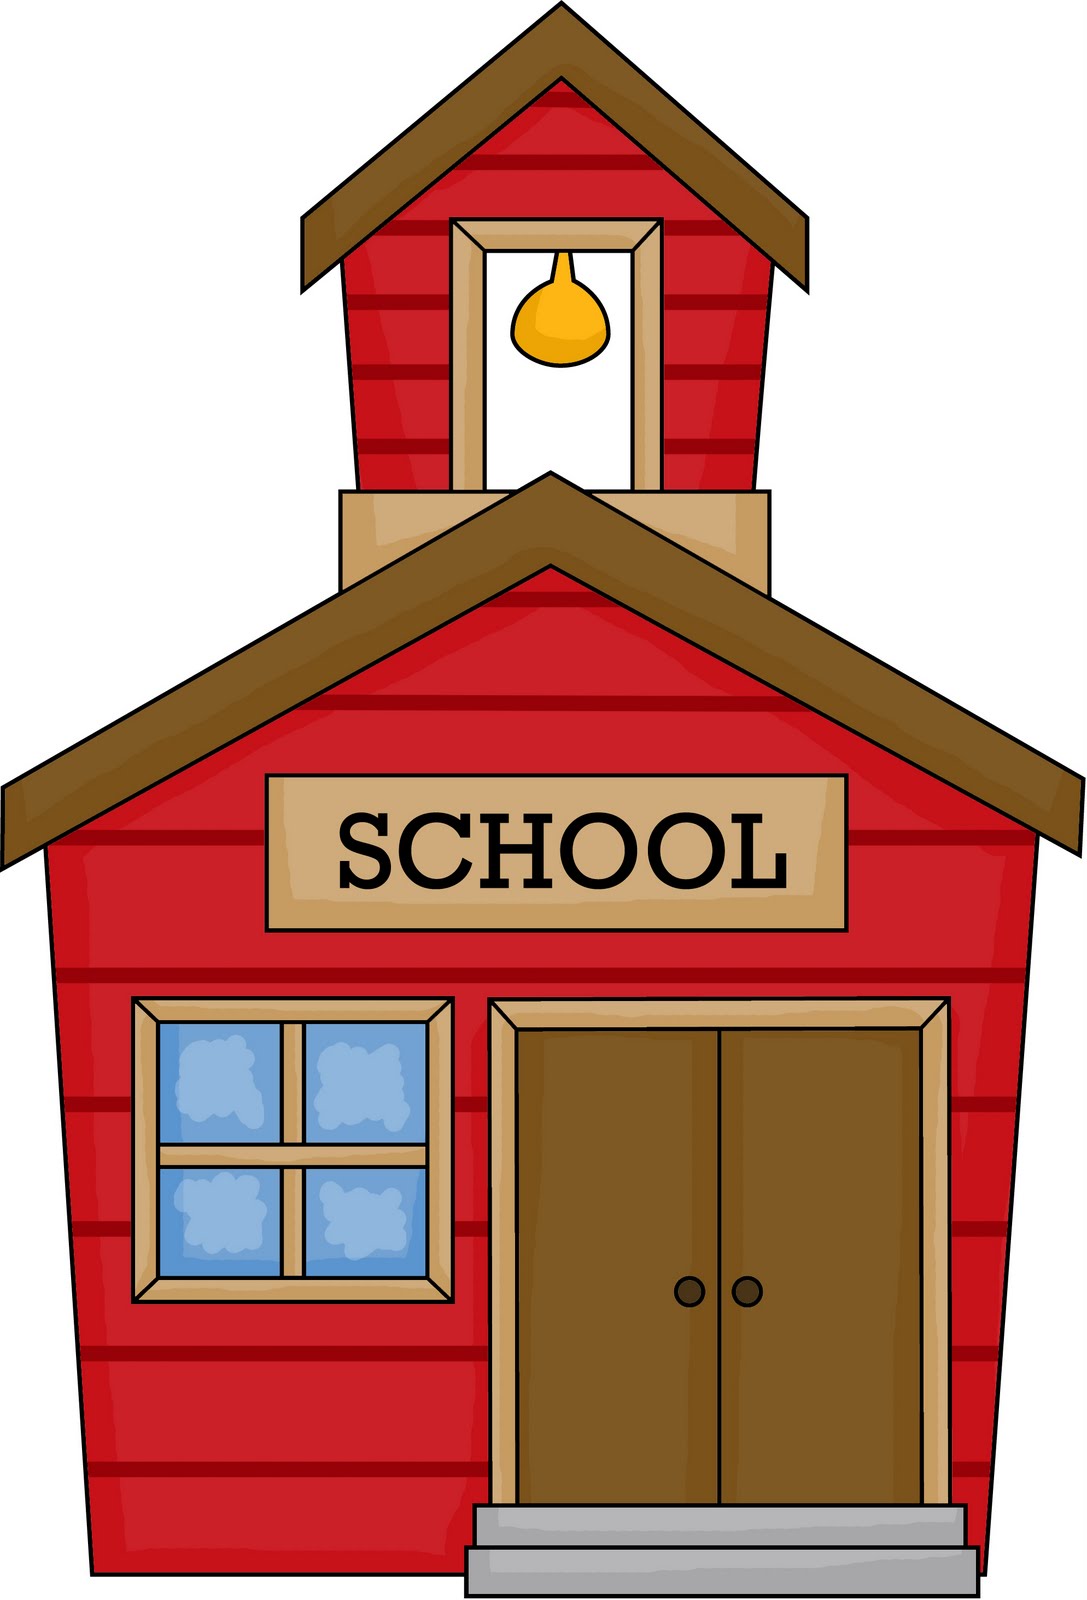 school house images - School Clip Art